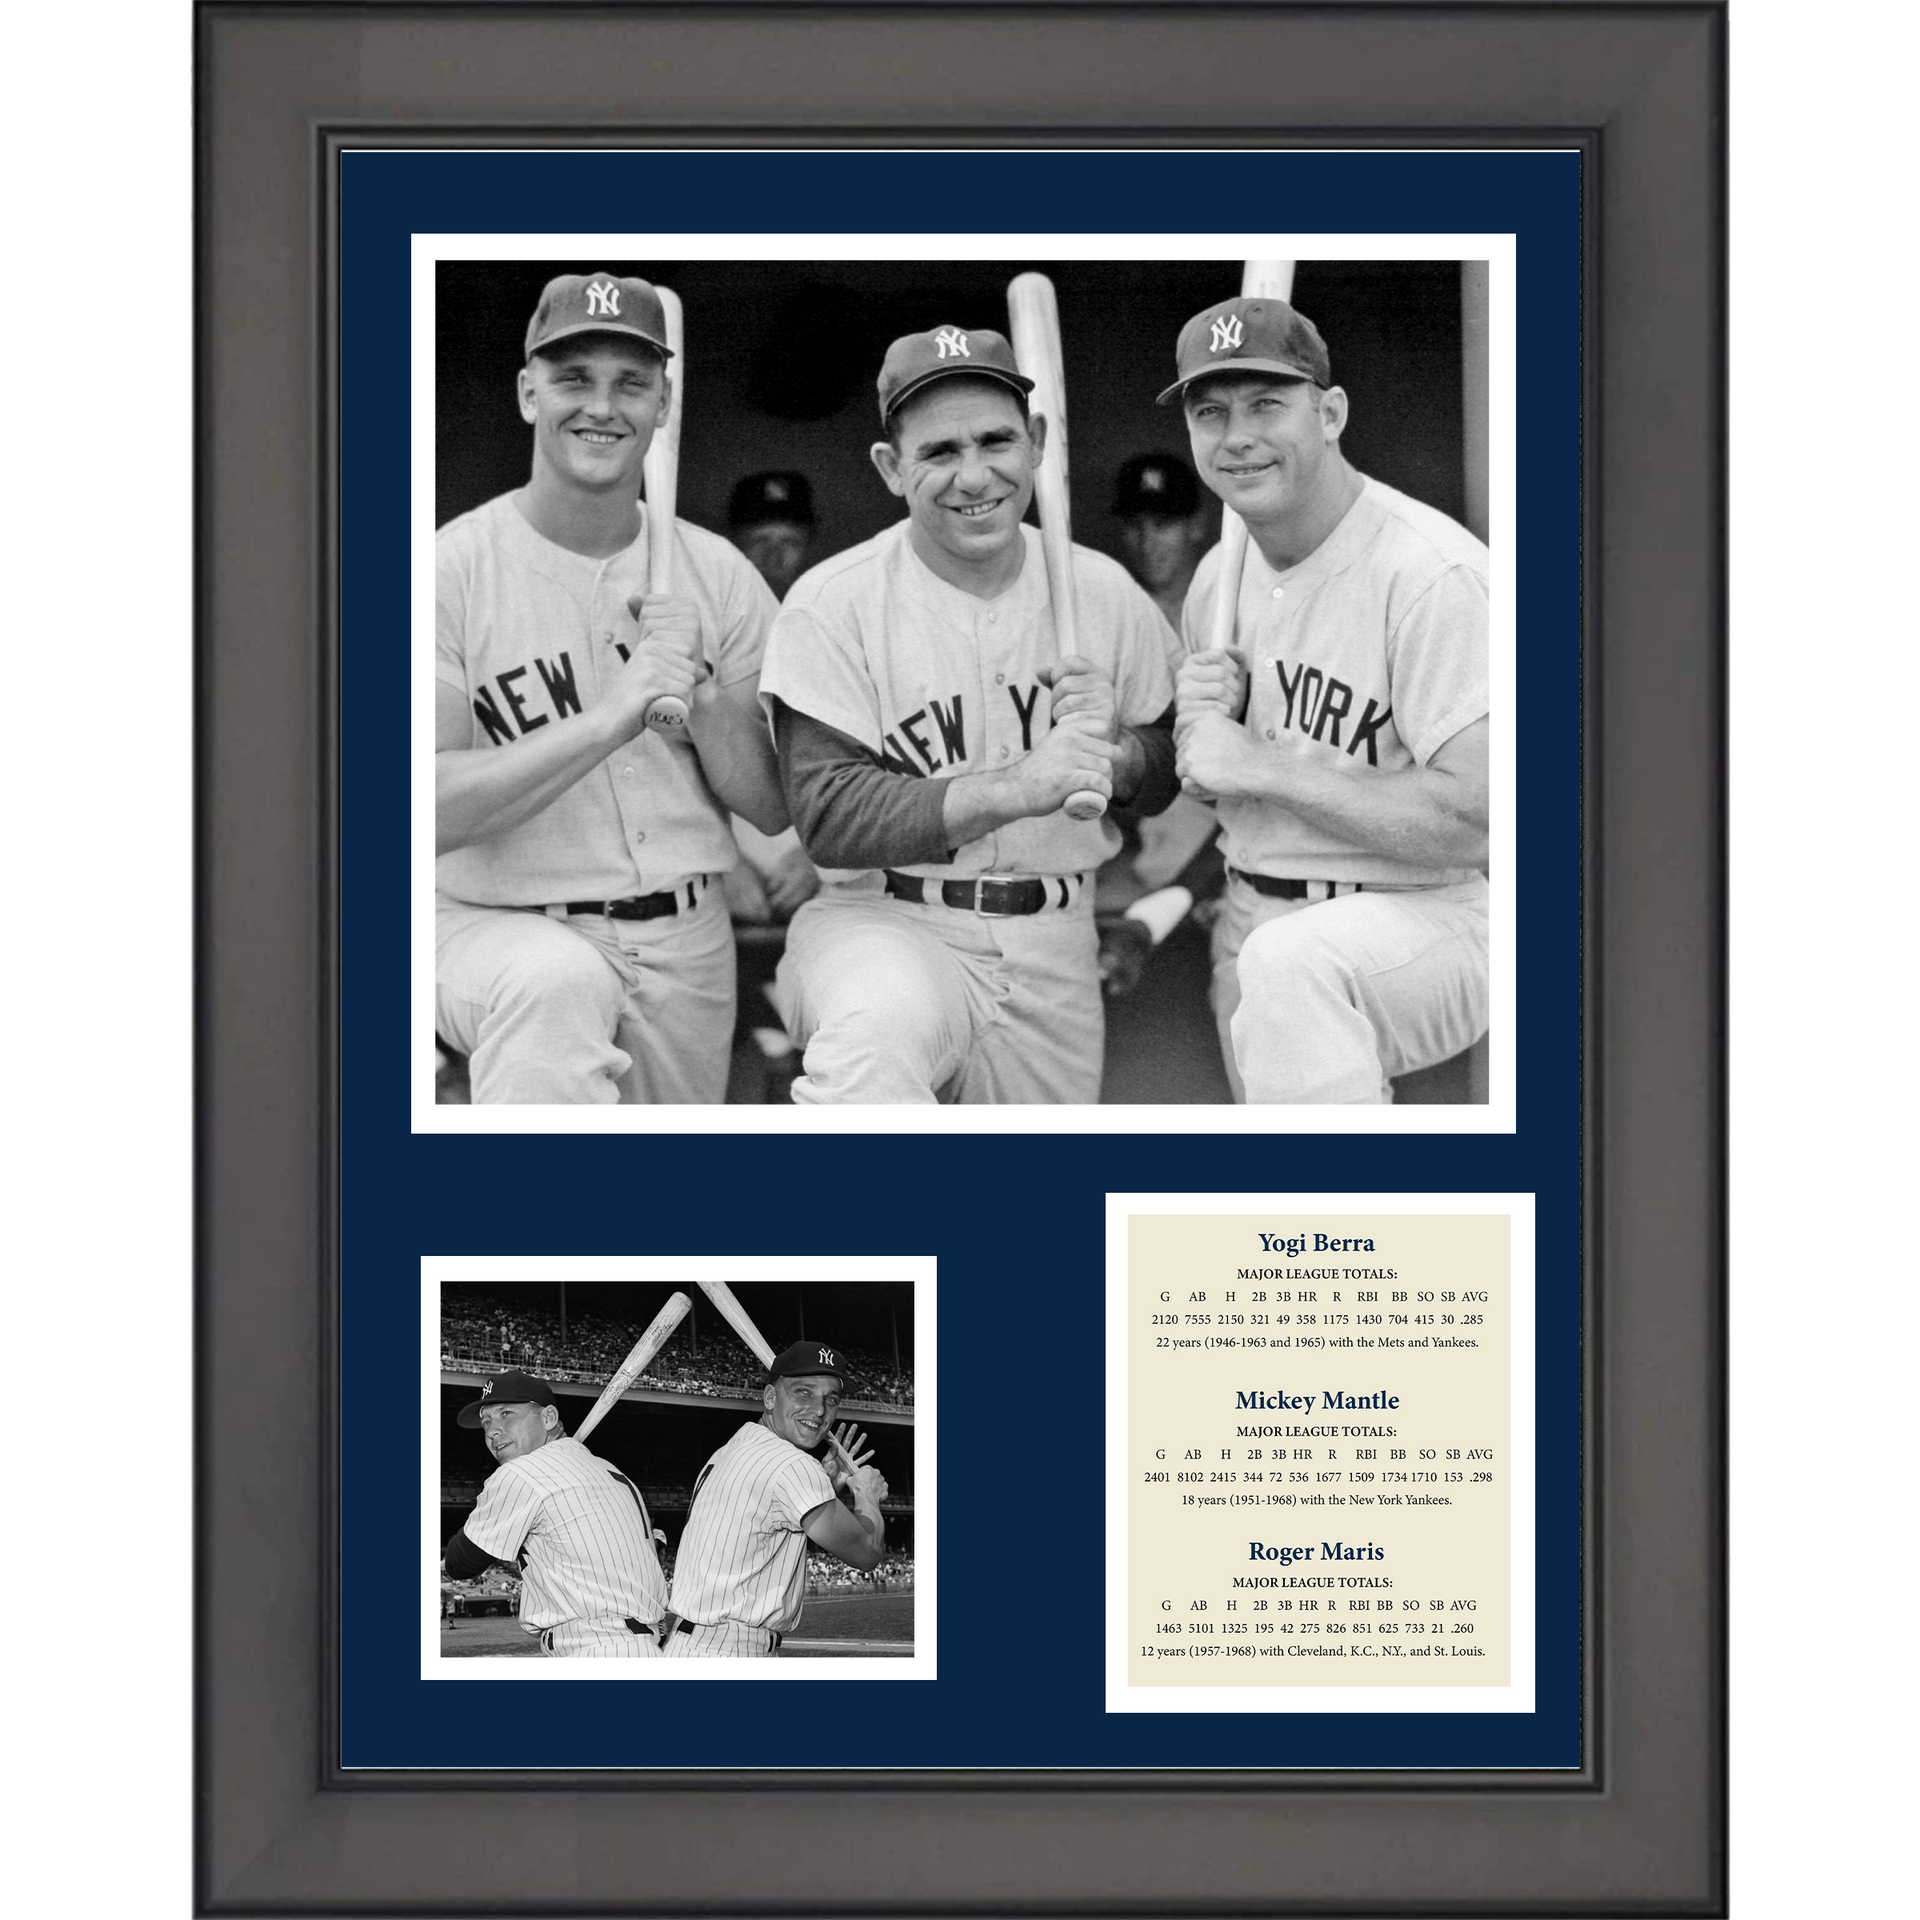 Yogi Berra Signed New York Yankees Jersey. Baseball